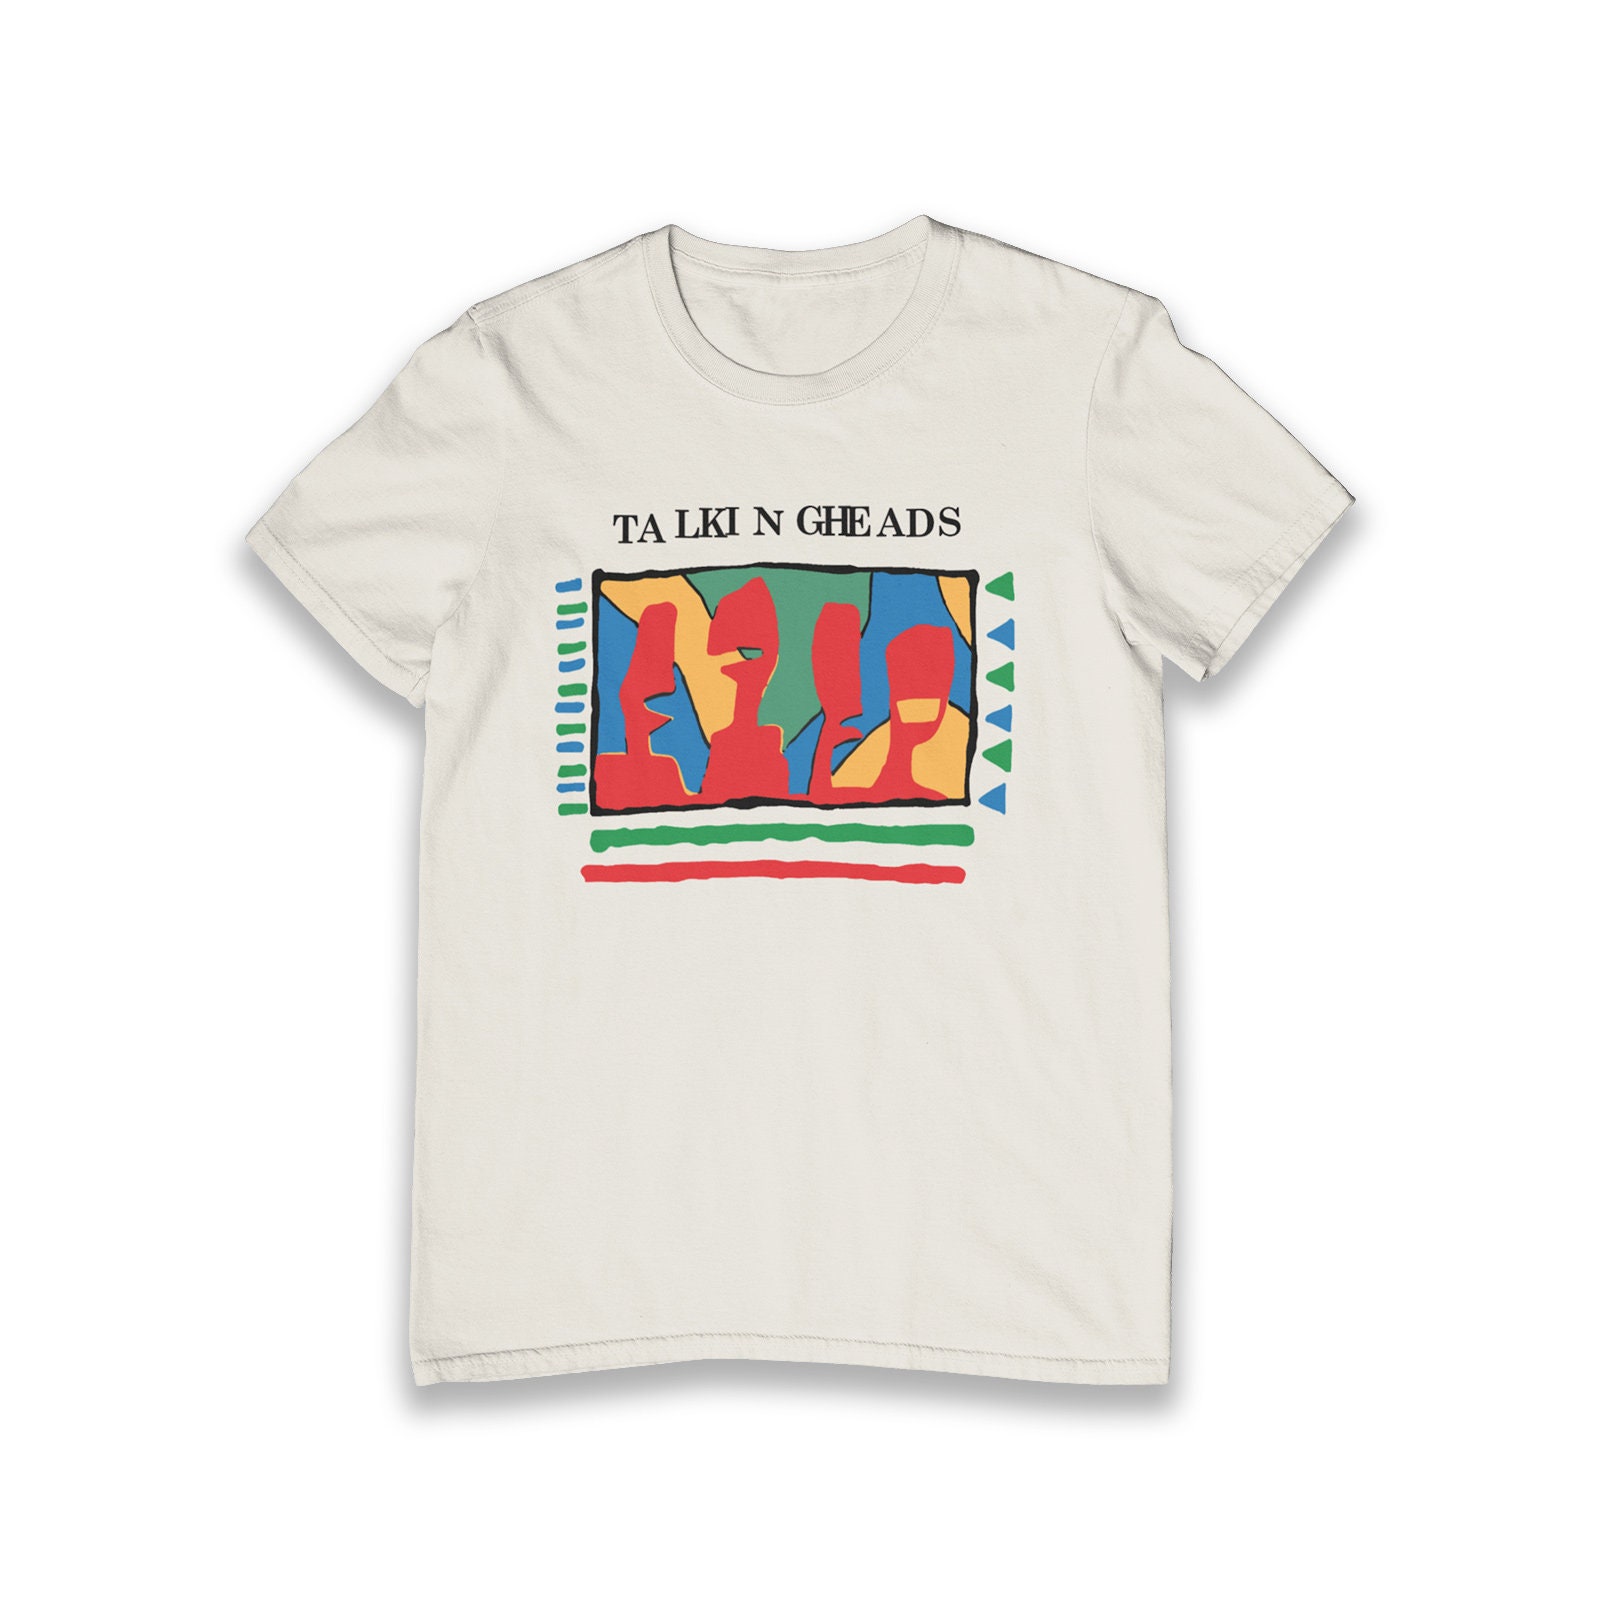 Talking Heads Vintage Graphic White Unisex T-shirt - Etsy